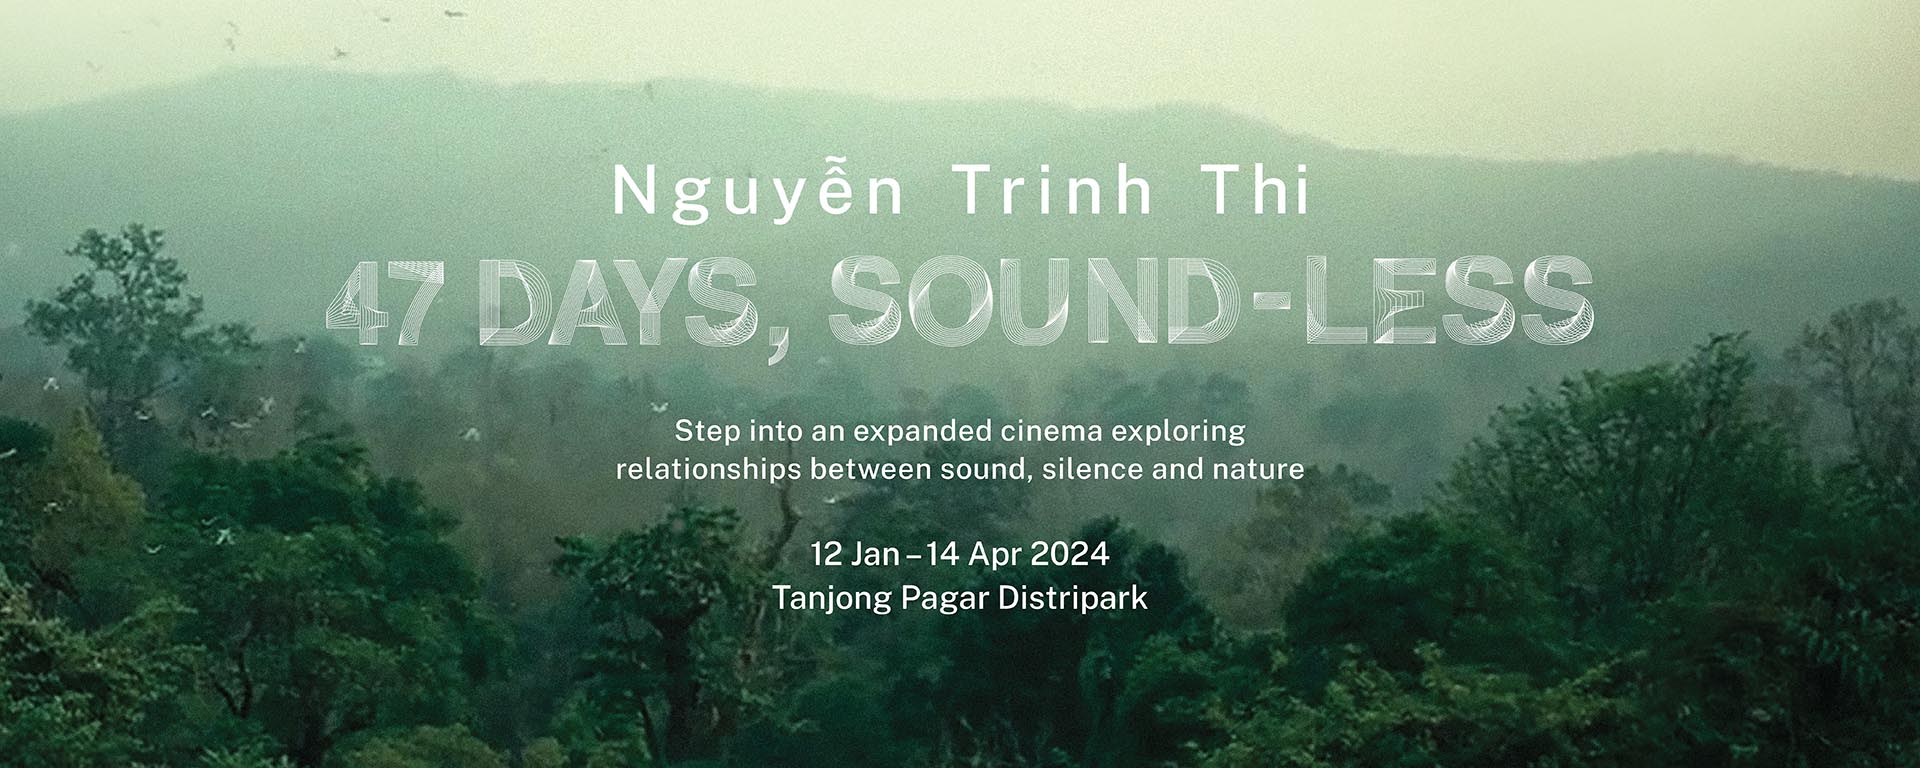 Nguyễn Trinh Thi: 47 Days, Sound-less